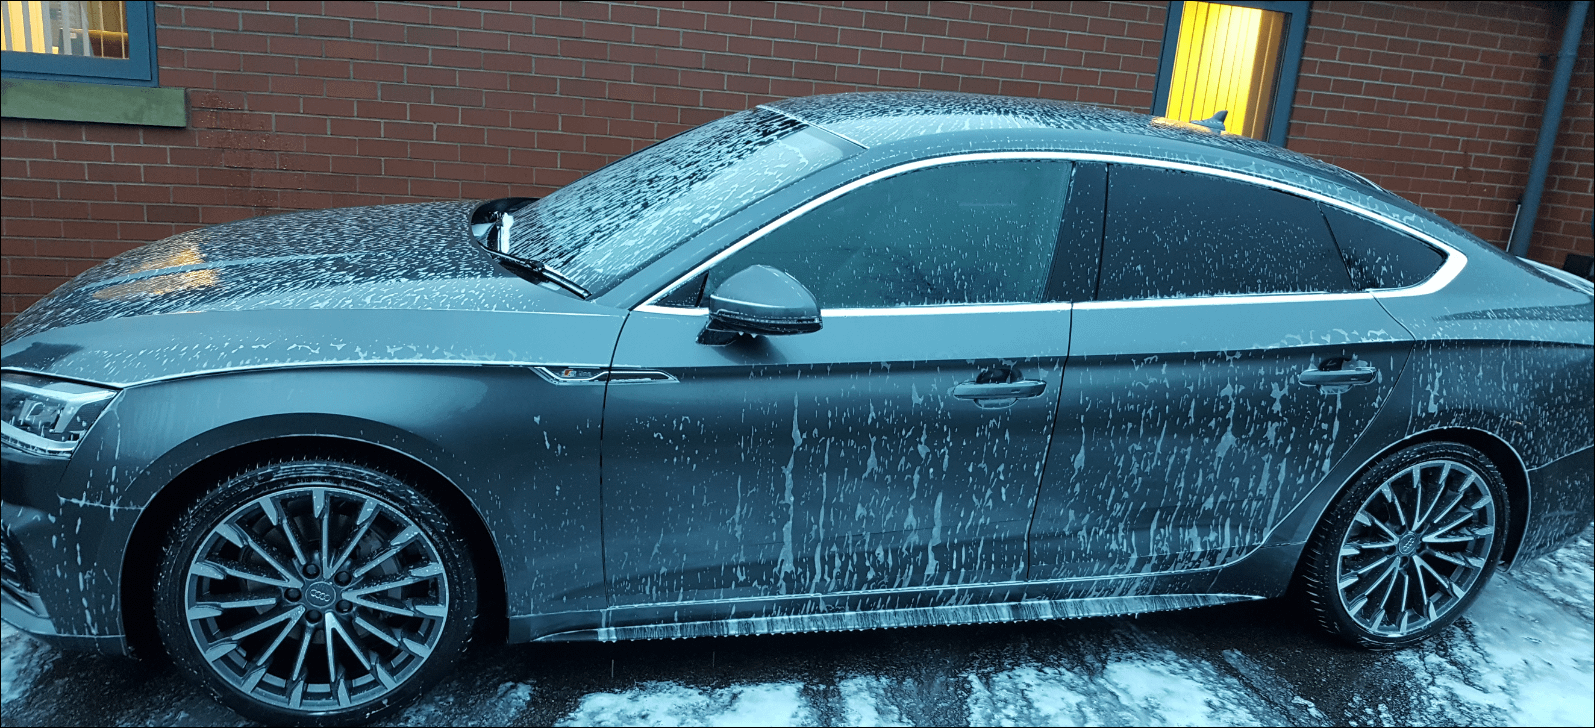 Car Wash - Pre Clean with foam